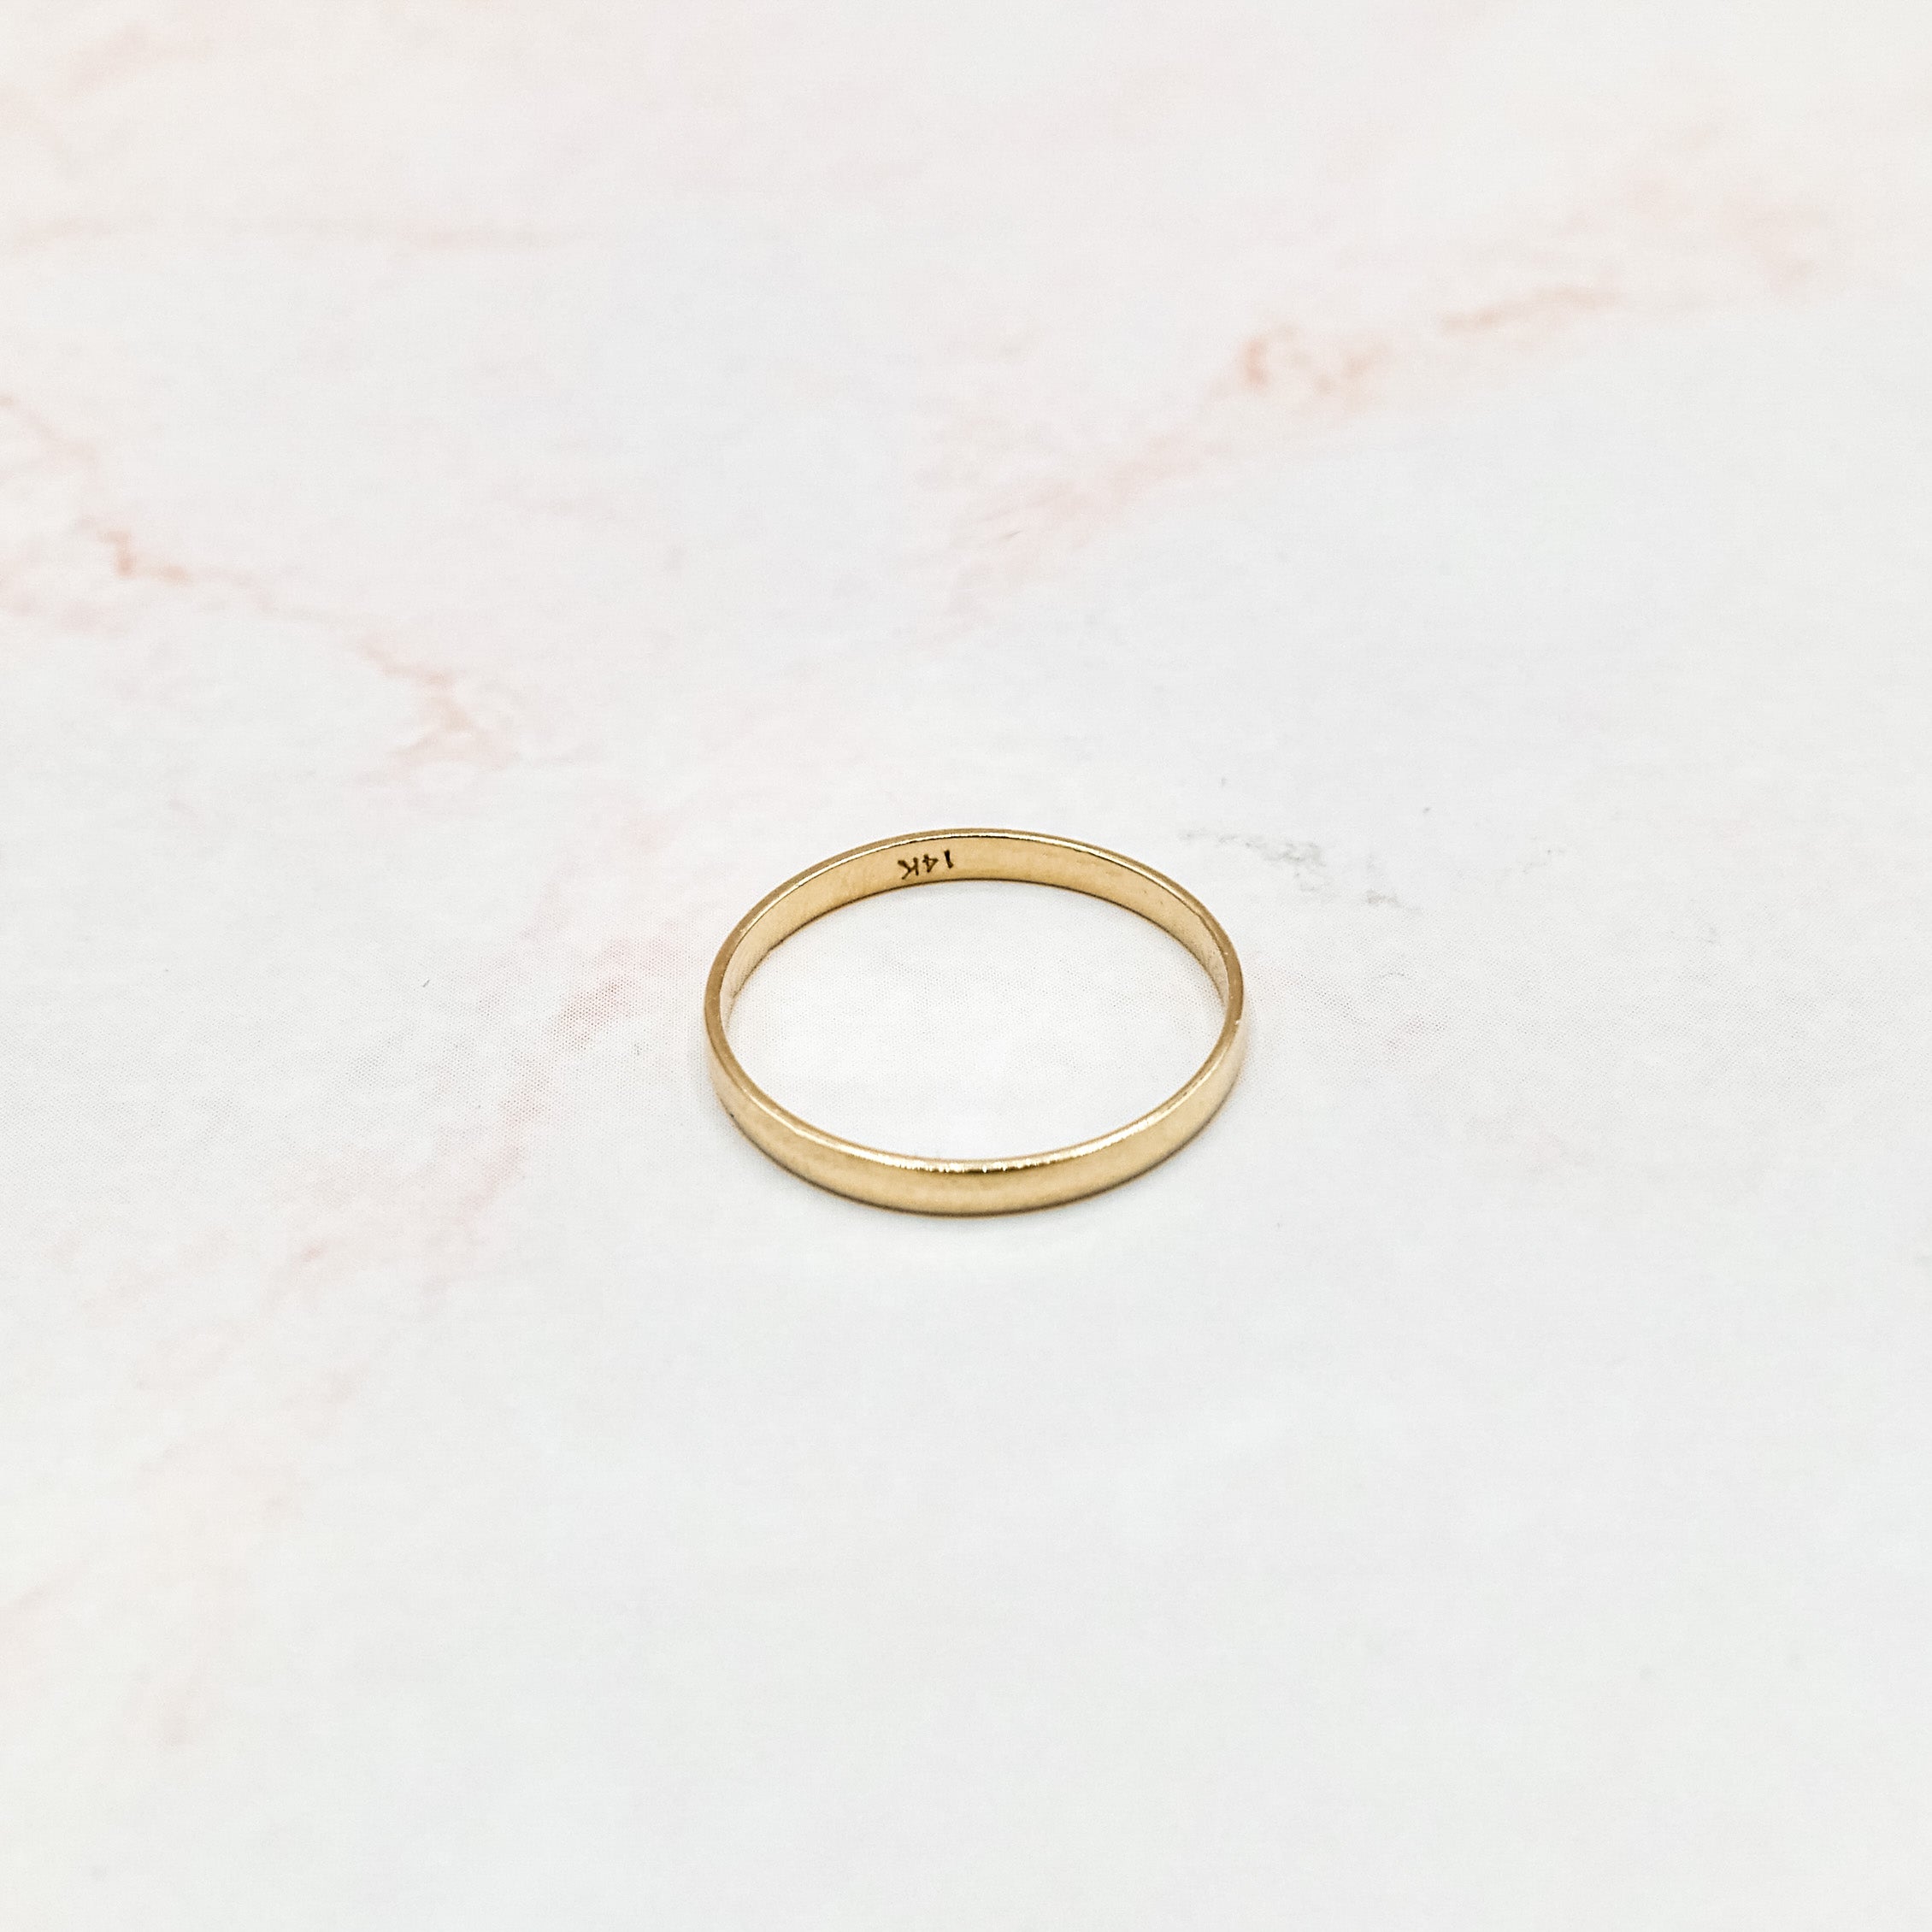 Thin Yellow Gold Band Ring